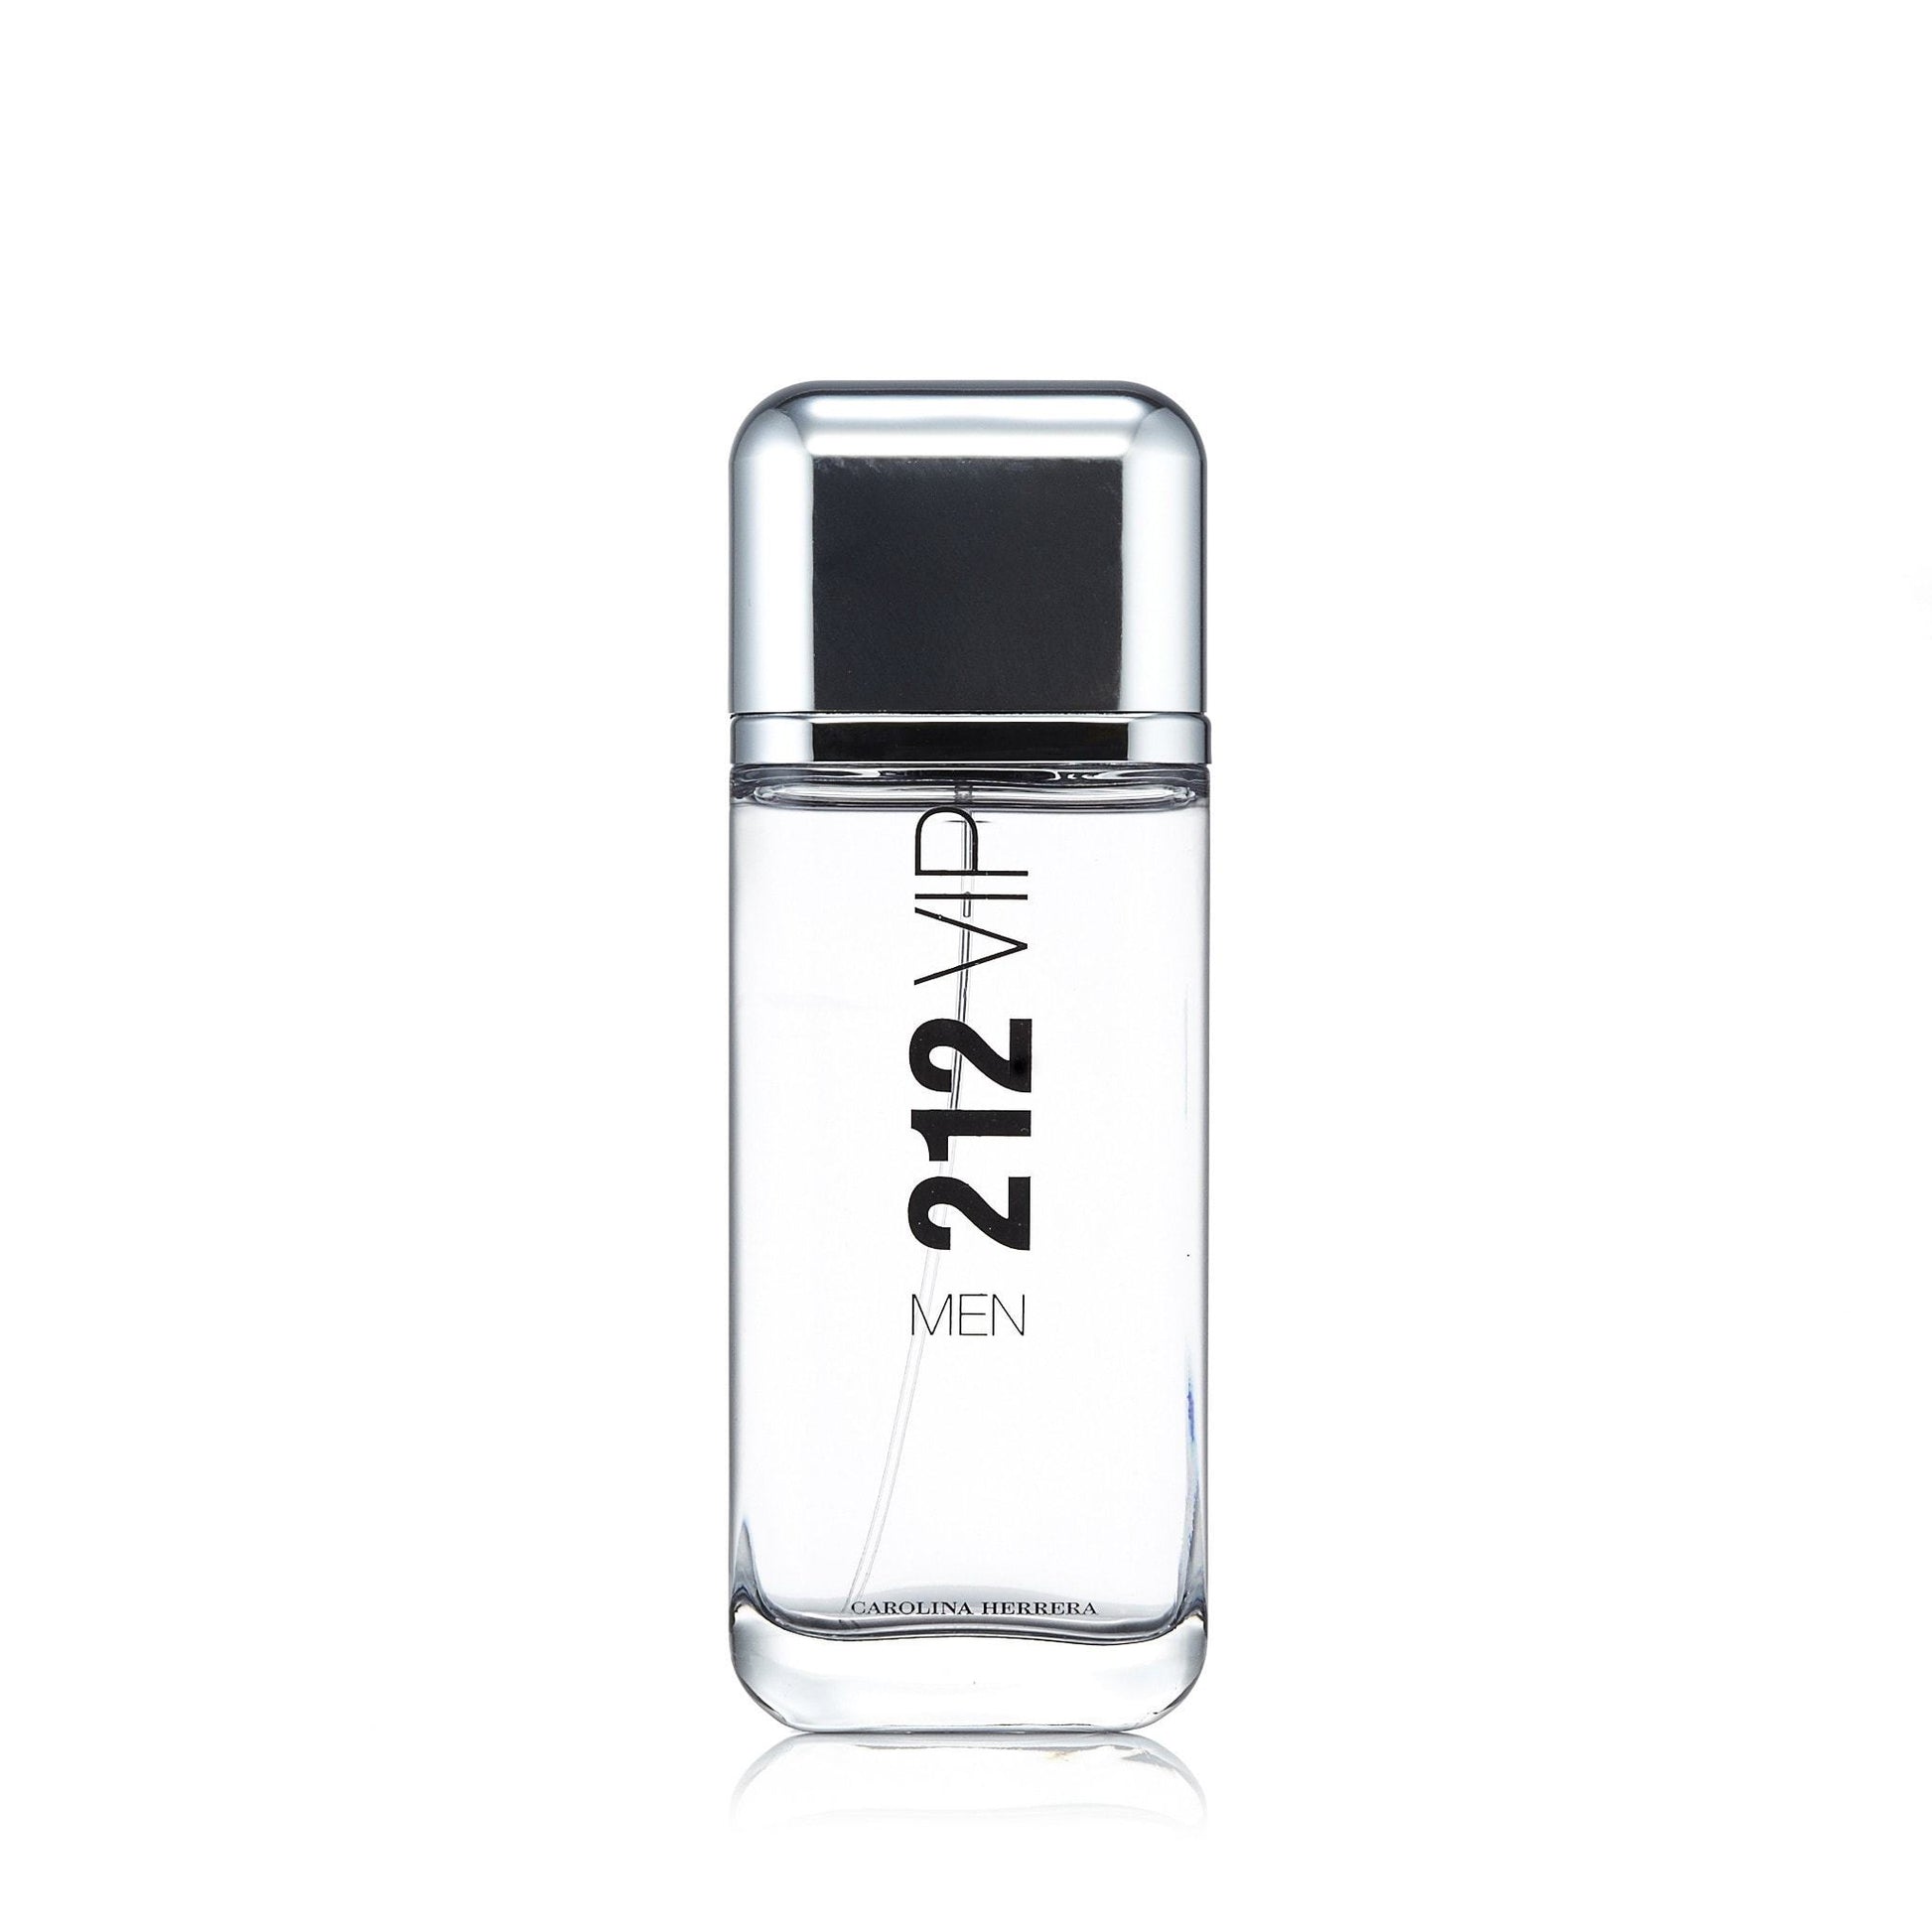 212 Vip Men Eau de Toilette Spray for Men by Carolina Herrera, Product image 3